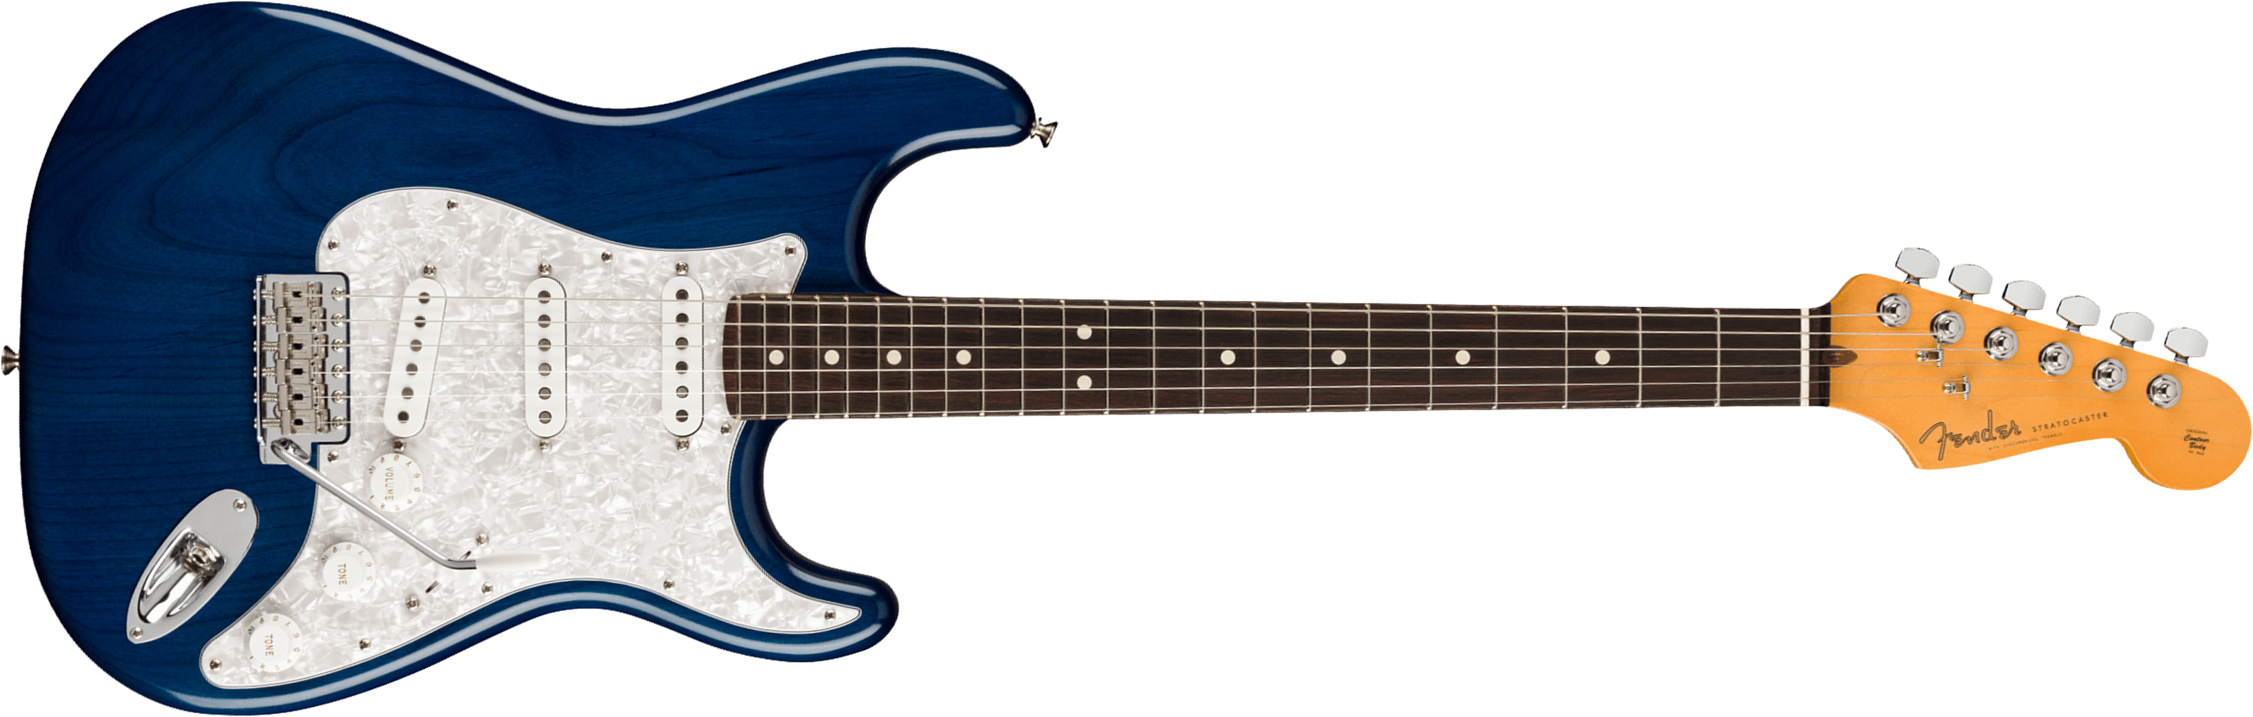 Fender Cory Wong Strat Signature Usa 3s Trem Rw - Sapphire Blue Transparent - Str shape electric guitar - Main picture